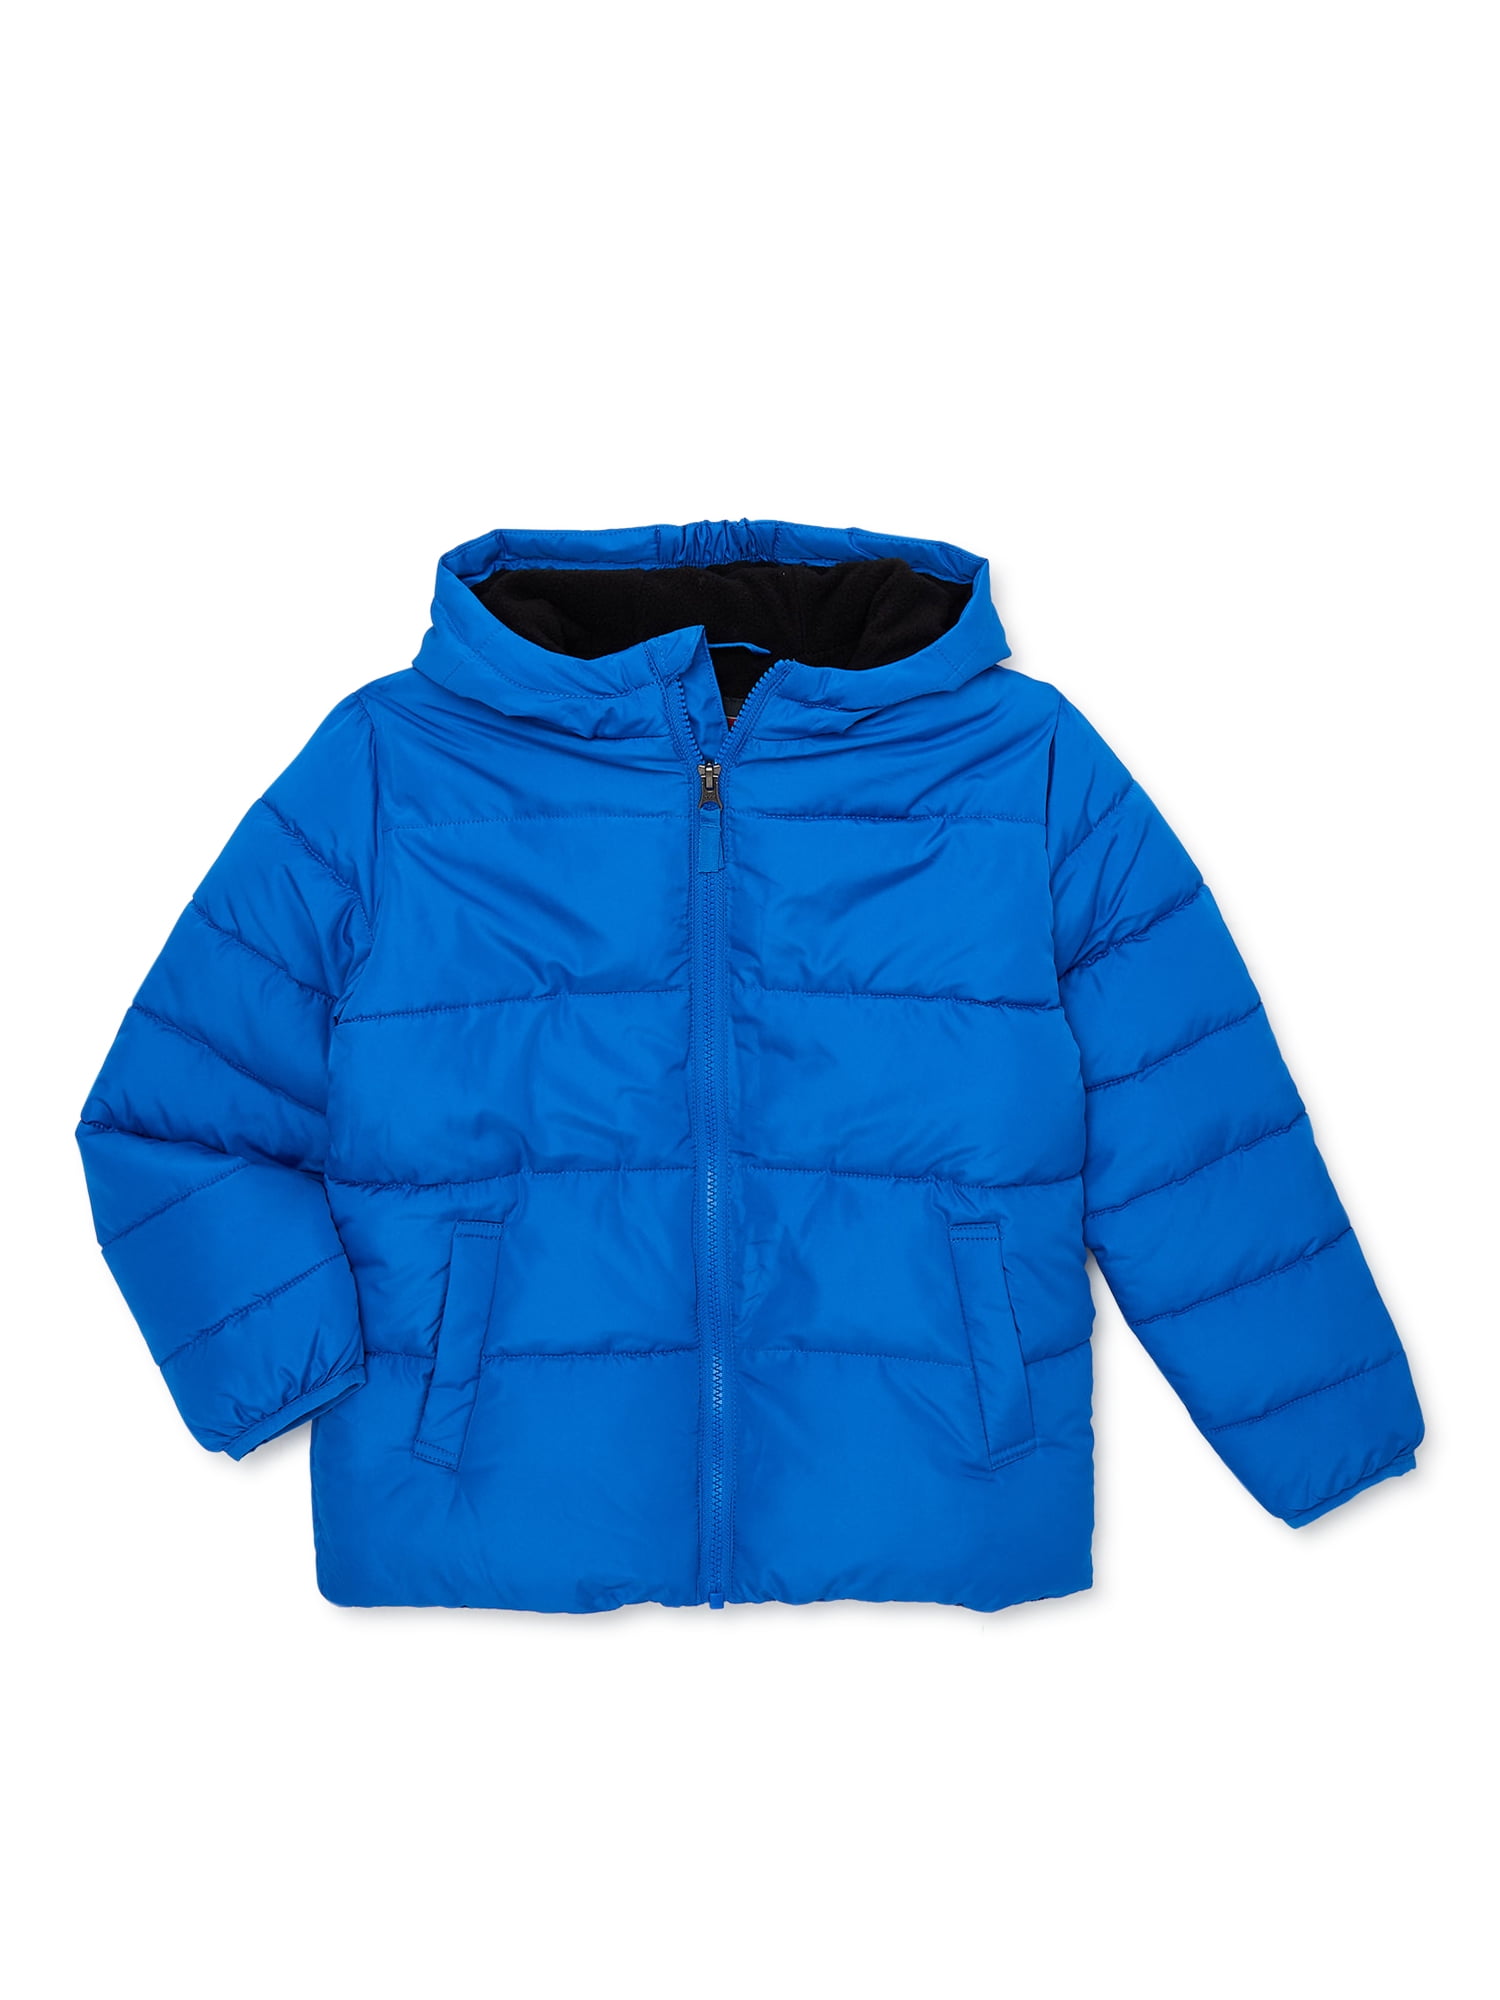 Swiss Tech Boys Winter Puffer Jacket with Hood, Sizes 4-18 & Husky